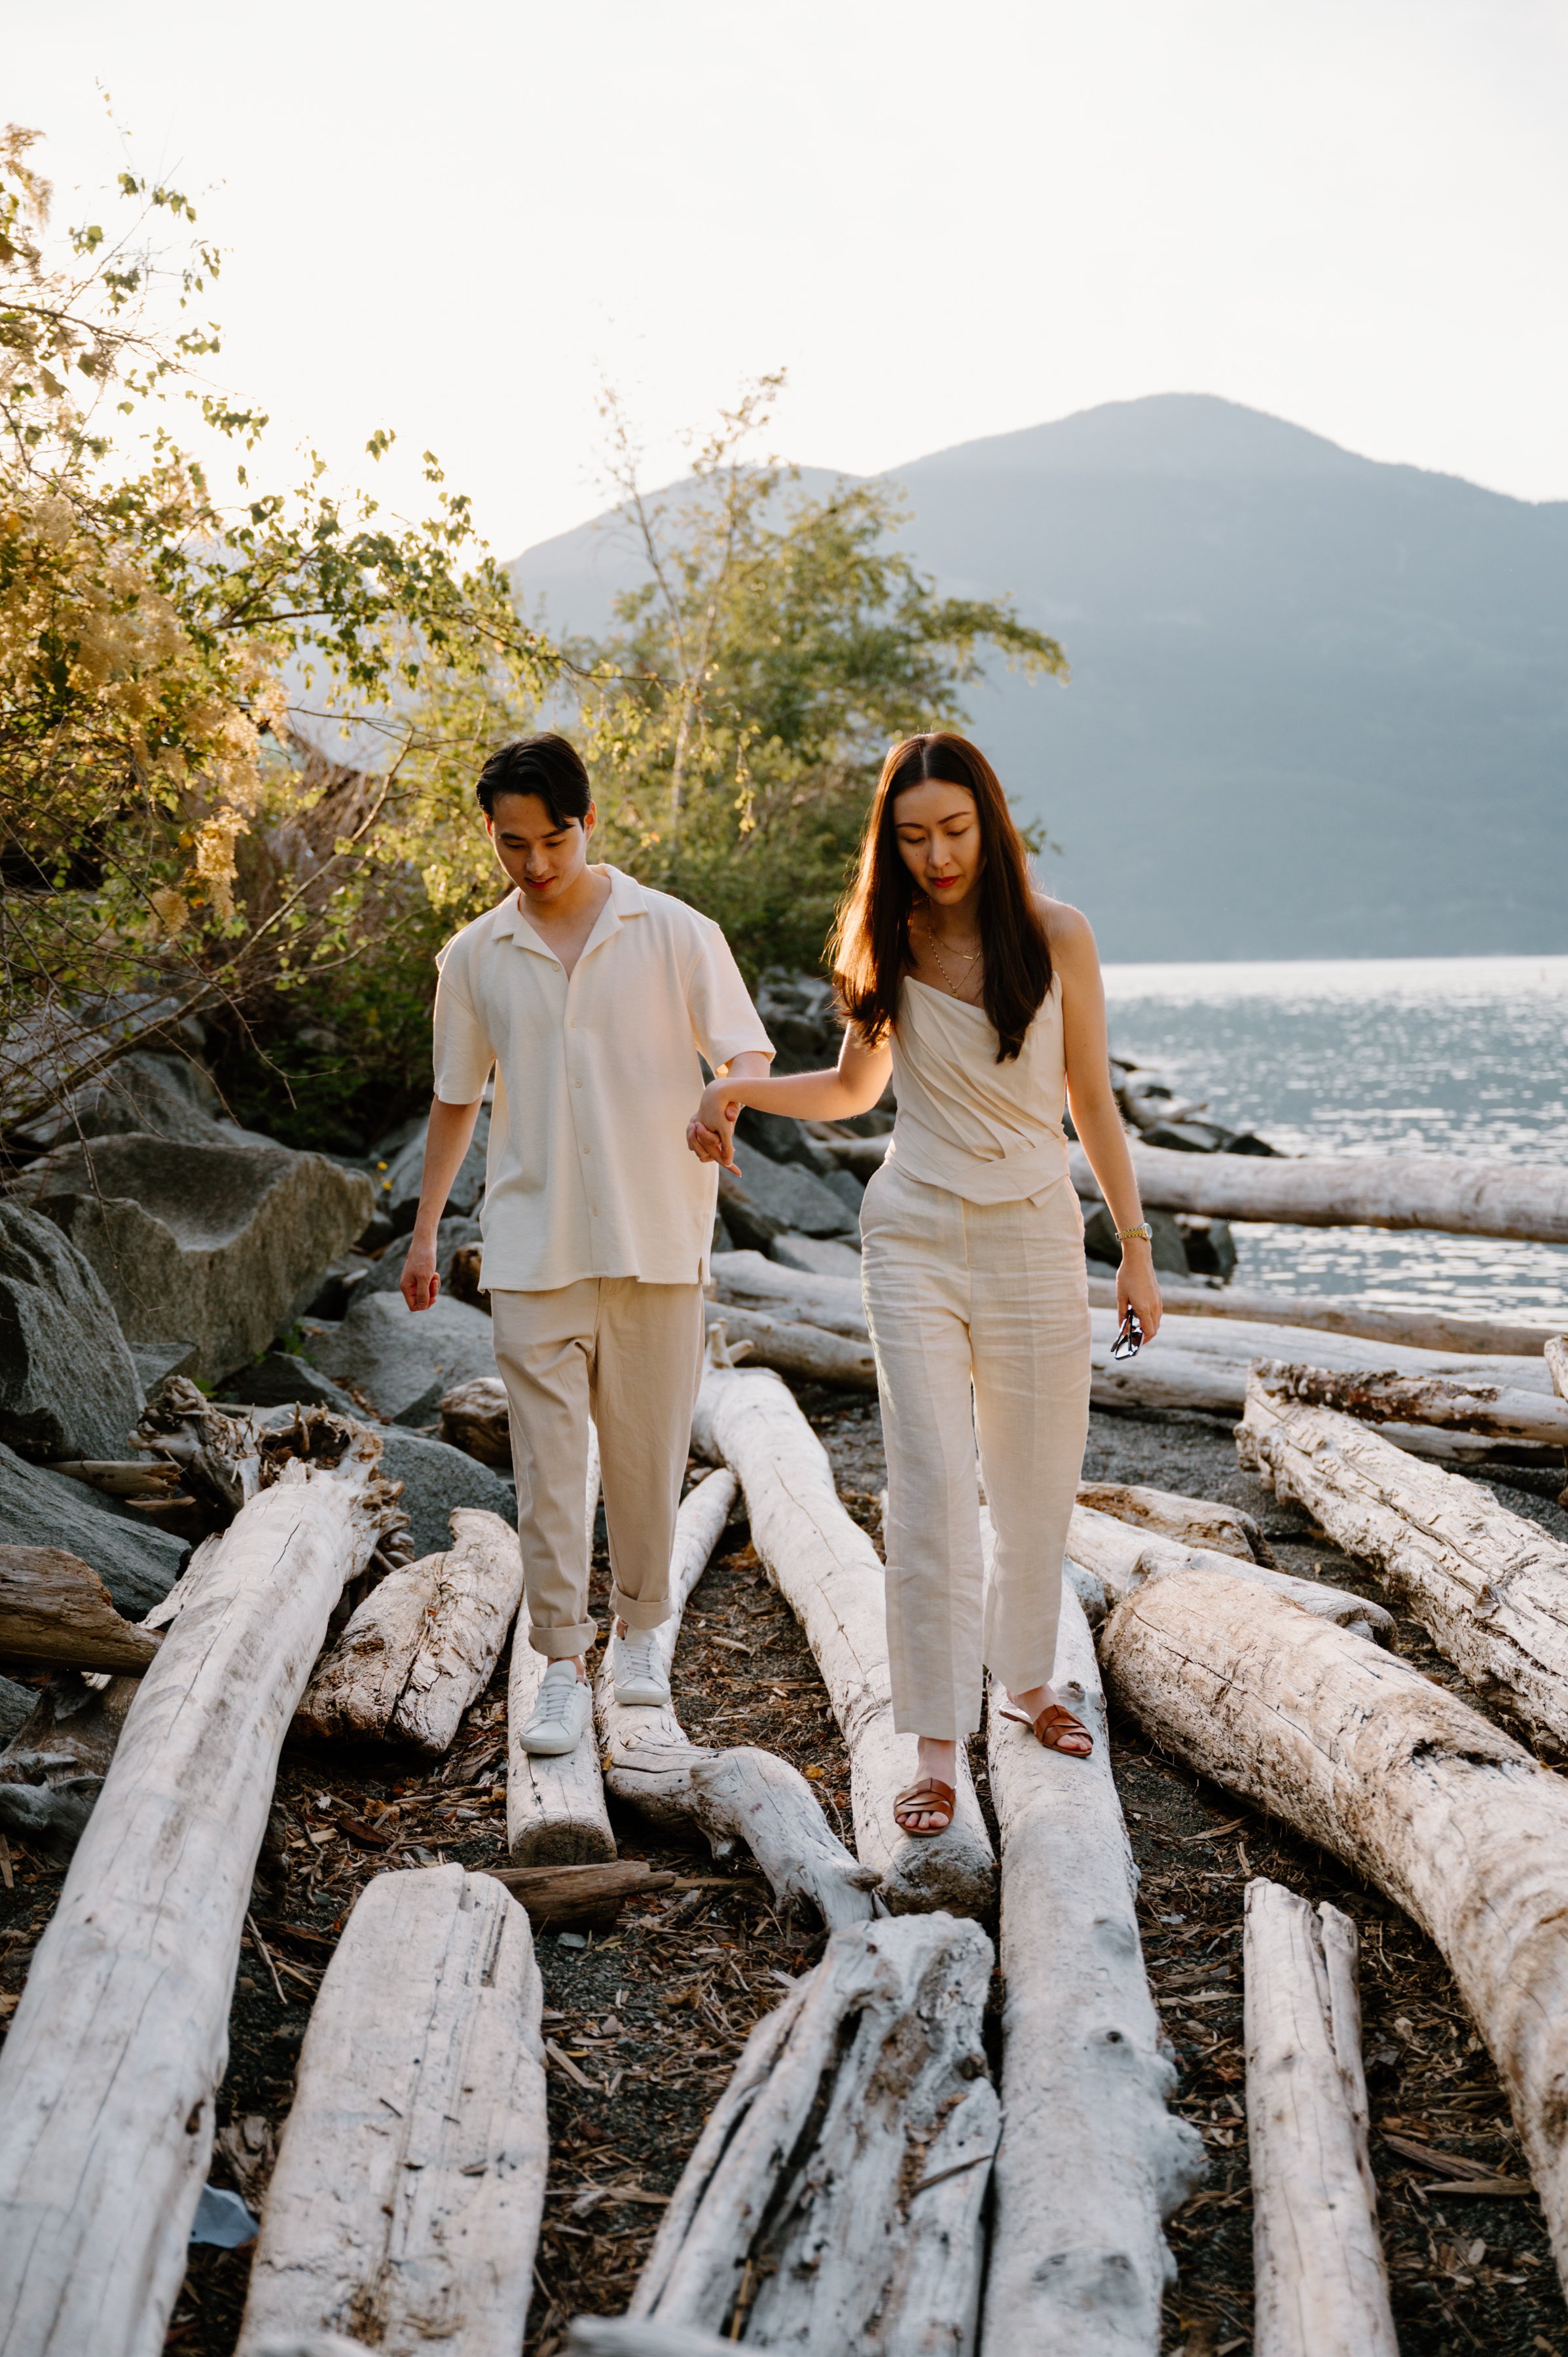 RosewoodStudios-PorteauCove-BCEngagement-BCWeddingPhotographer-Vancouver-Wedding-Photographer-Proposal-6.jpg